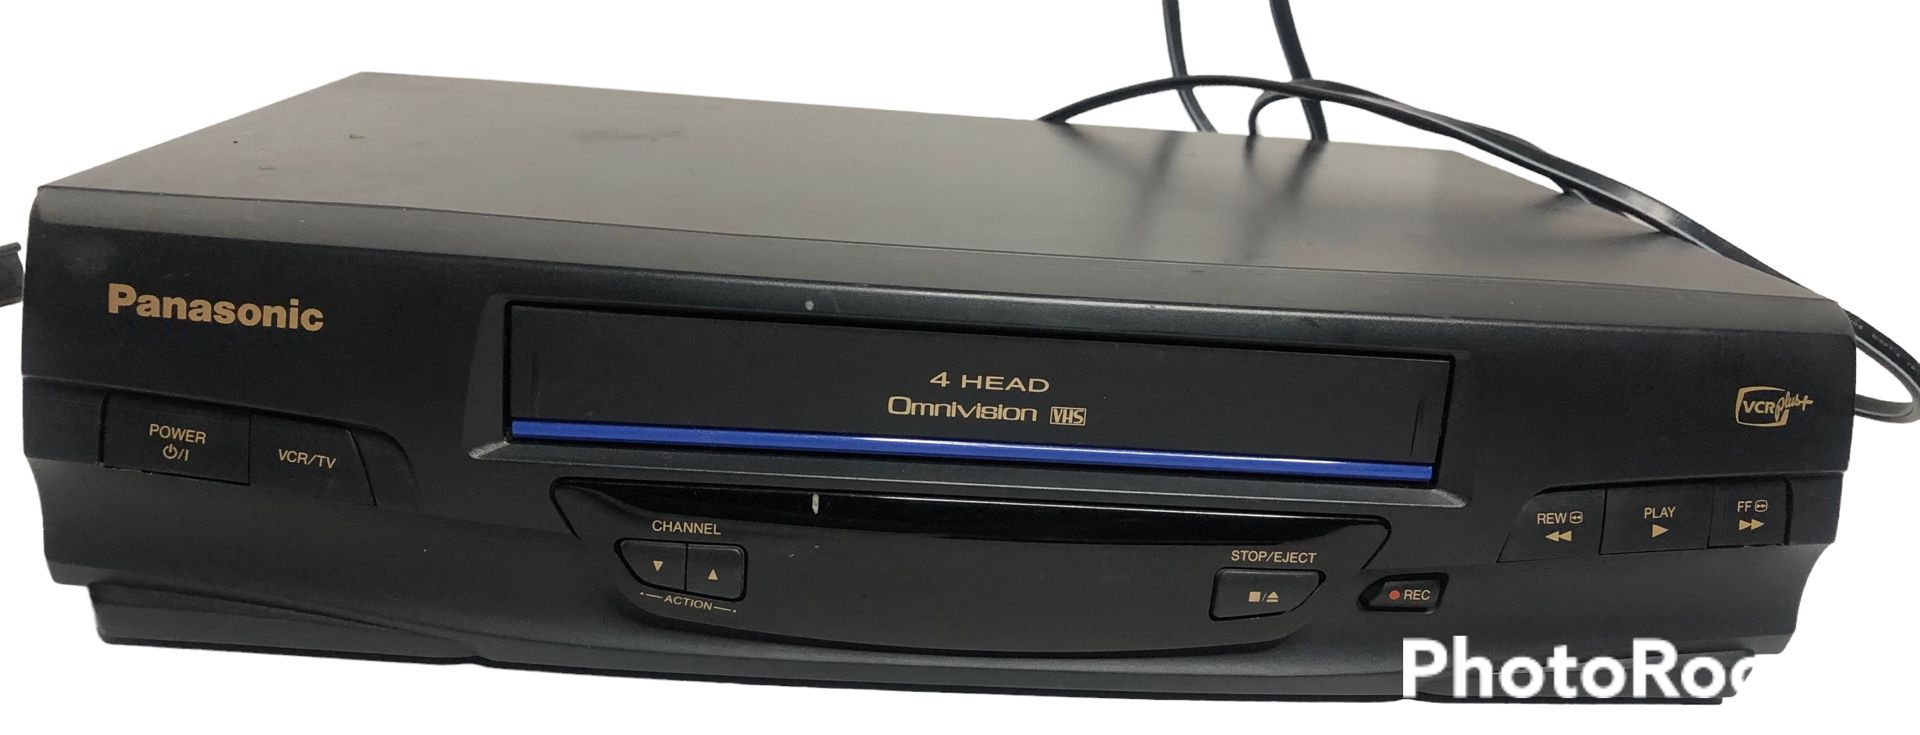 Panasonic VCR 4 Head Omnivision - WORKS